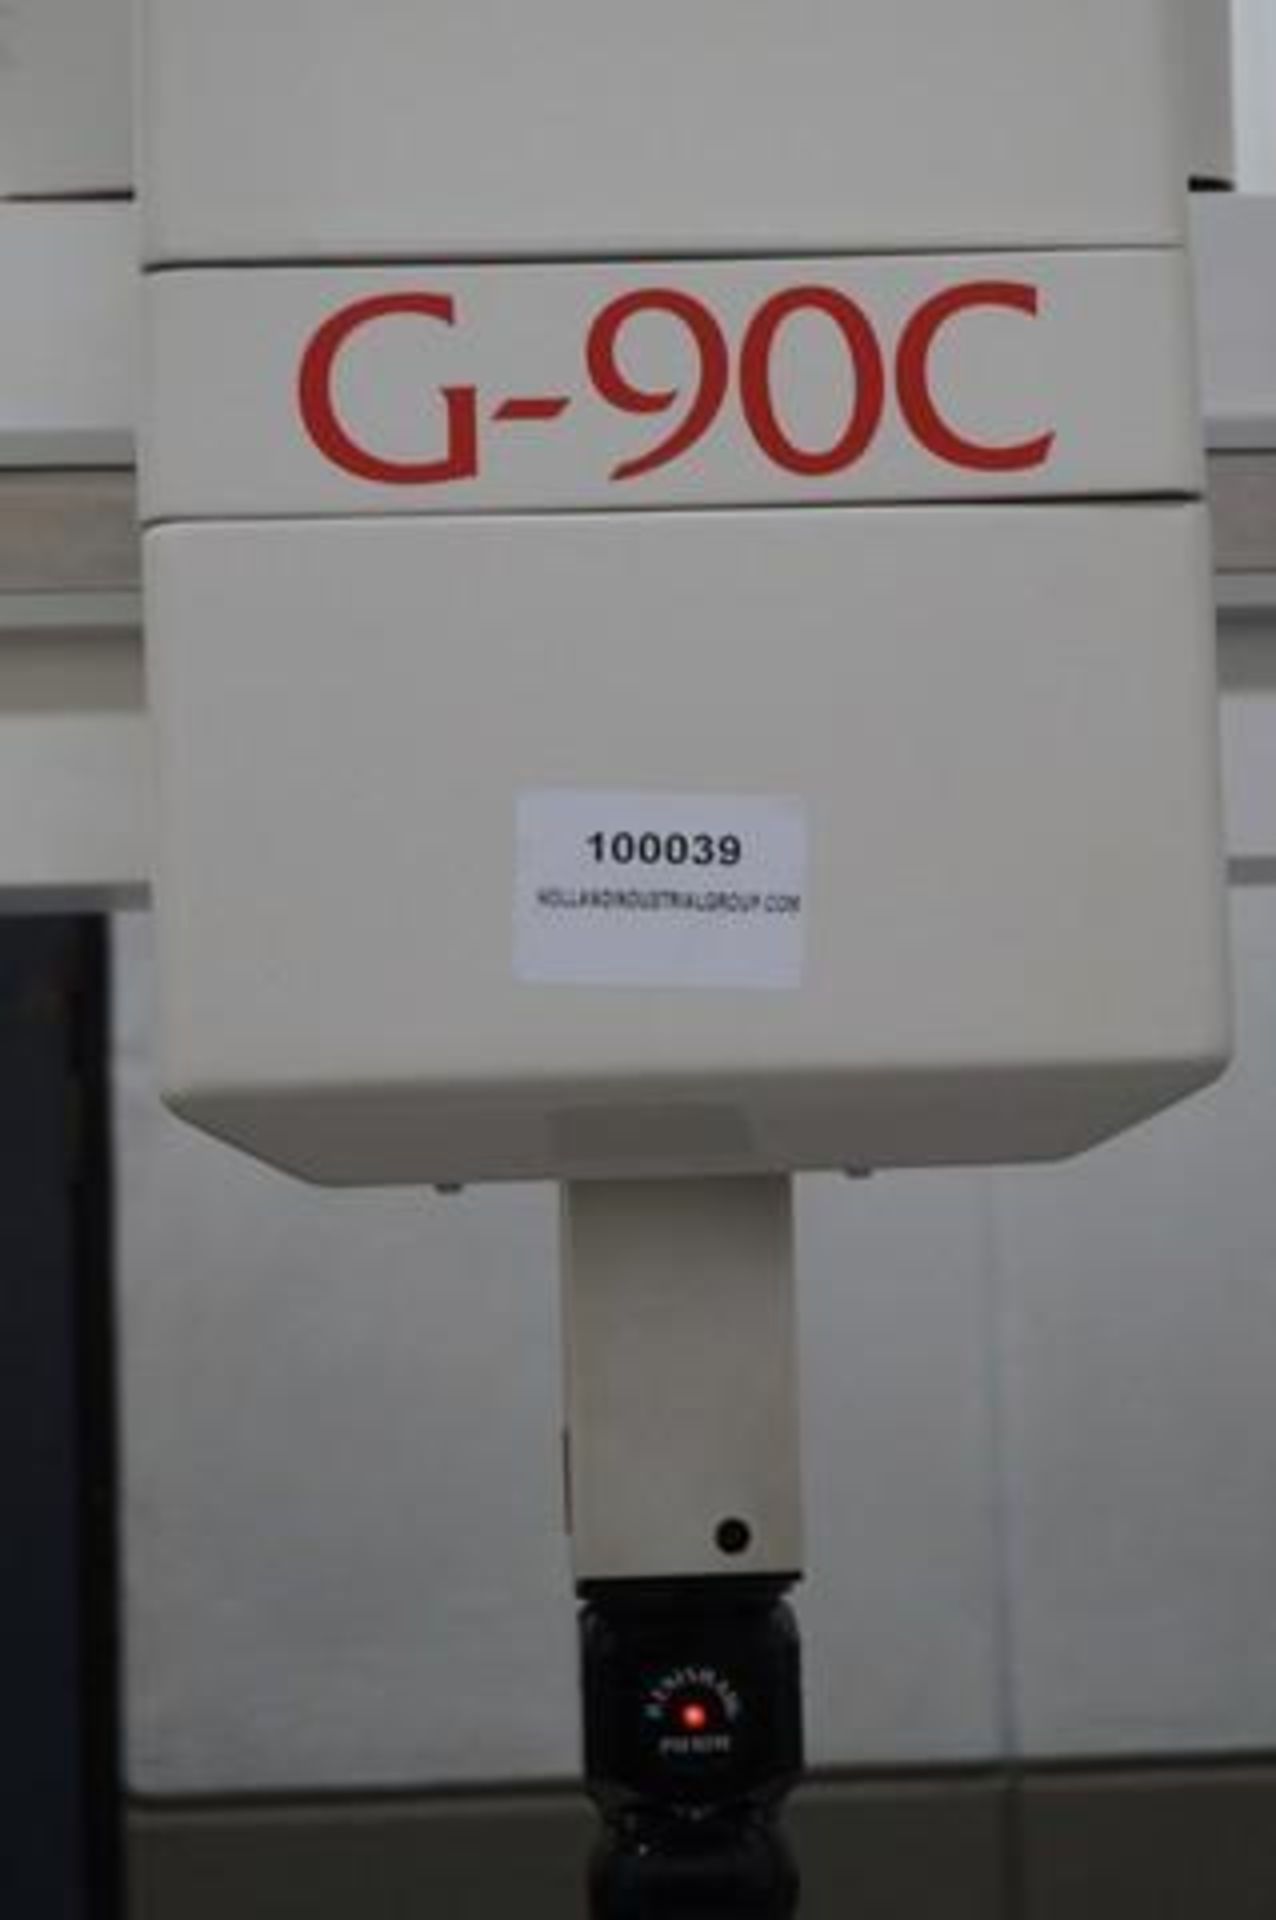 2000 LK G90C Coordinate Measuring Machine - Image 3 of 9